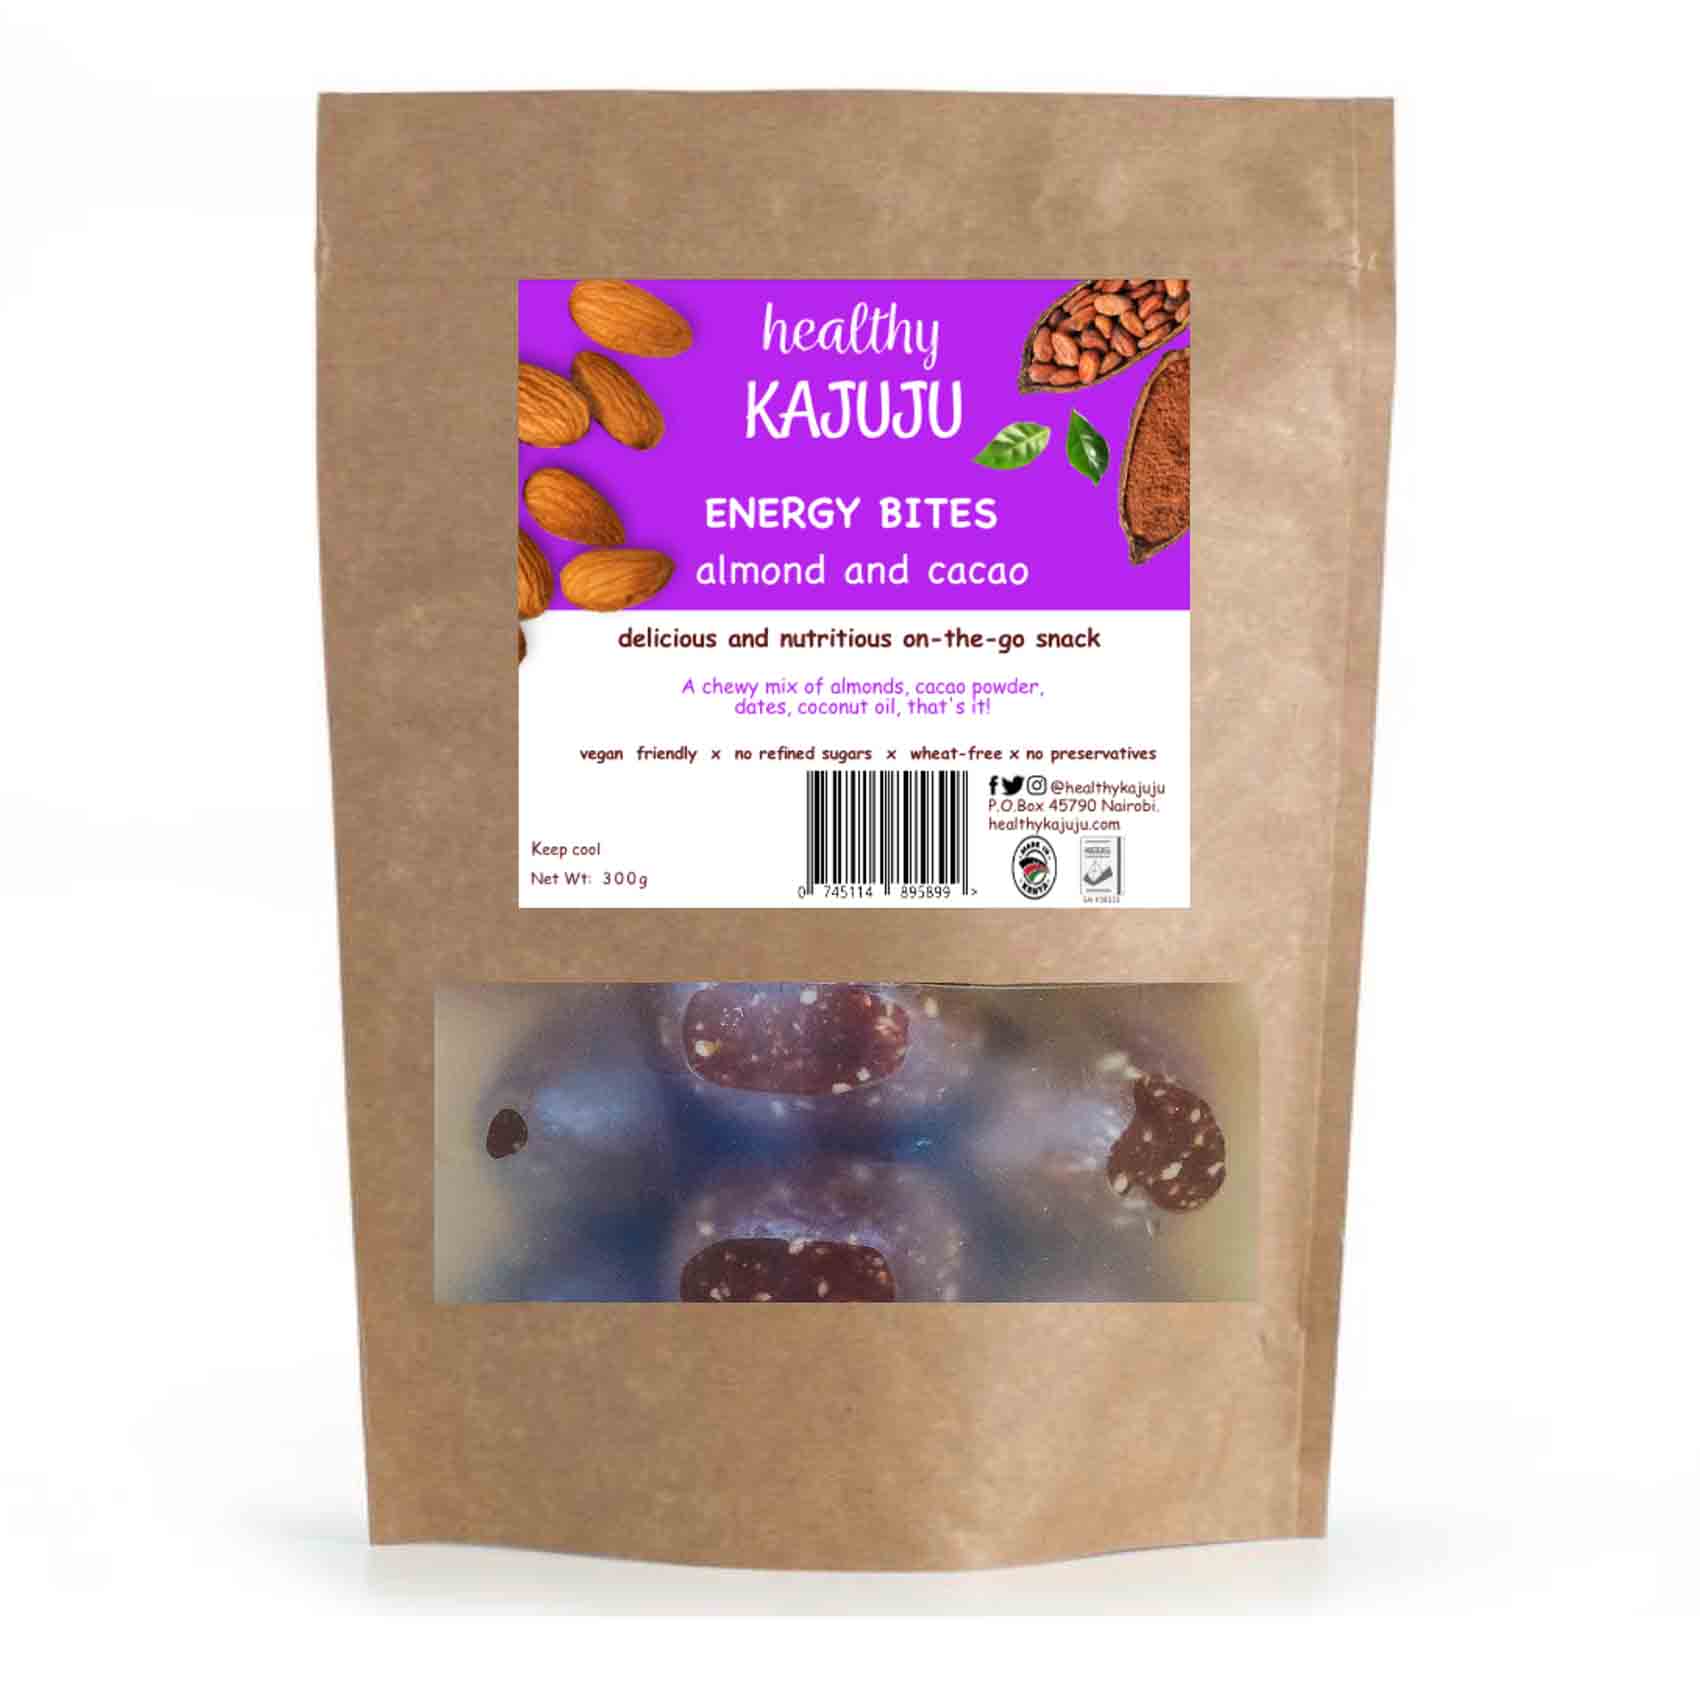 Healthy Kajuju Almond And Cacao Energy Bites 300g